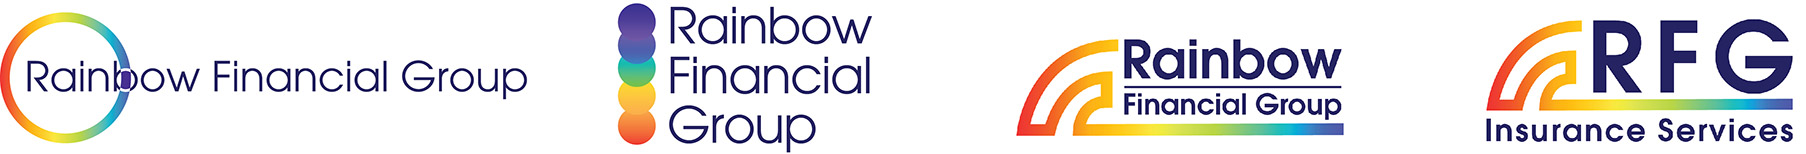 Rainbow Financial Group logo design